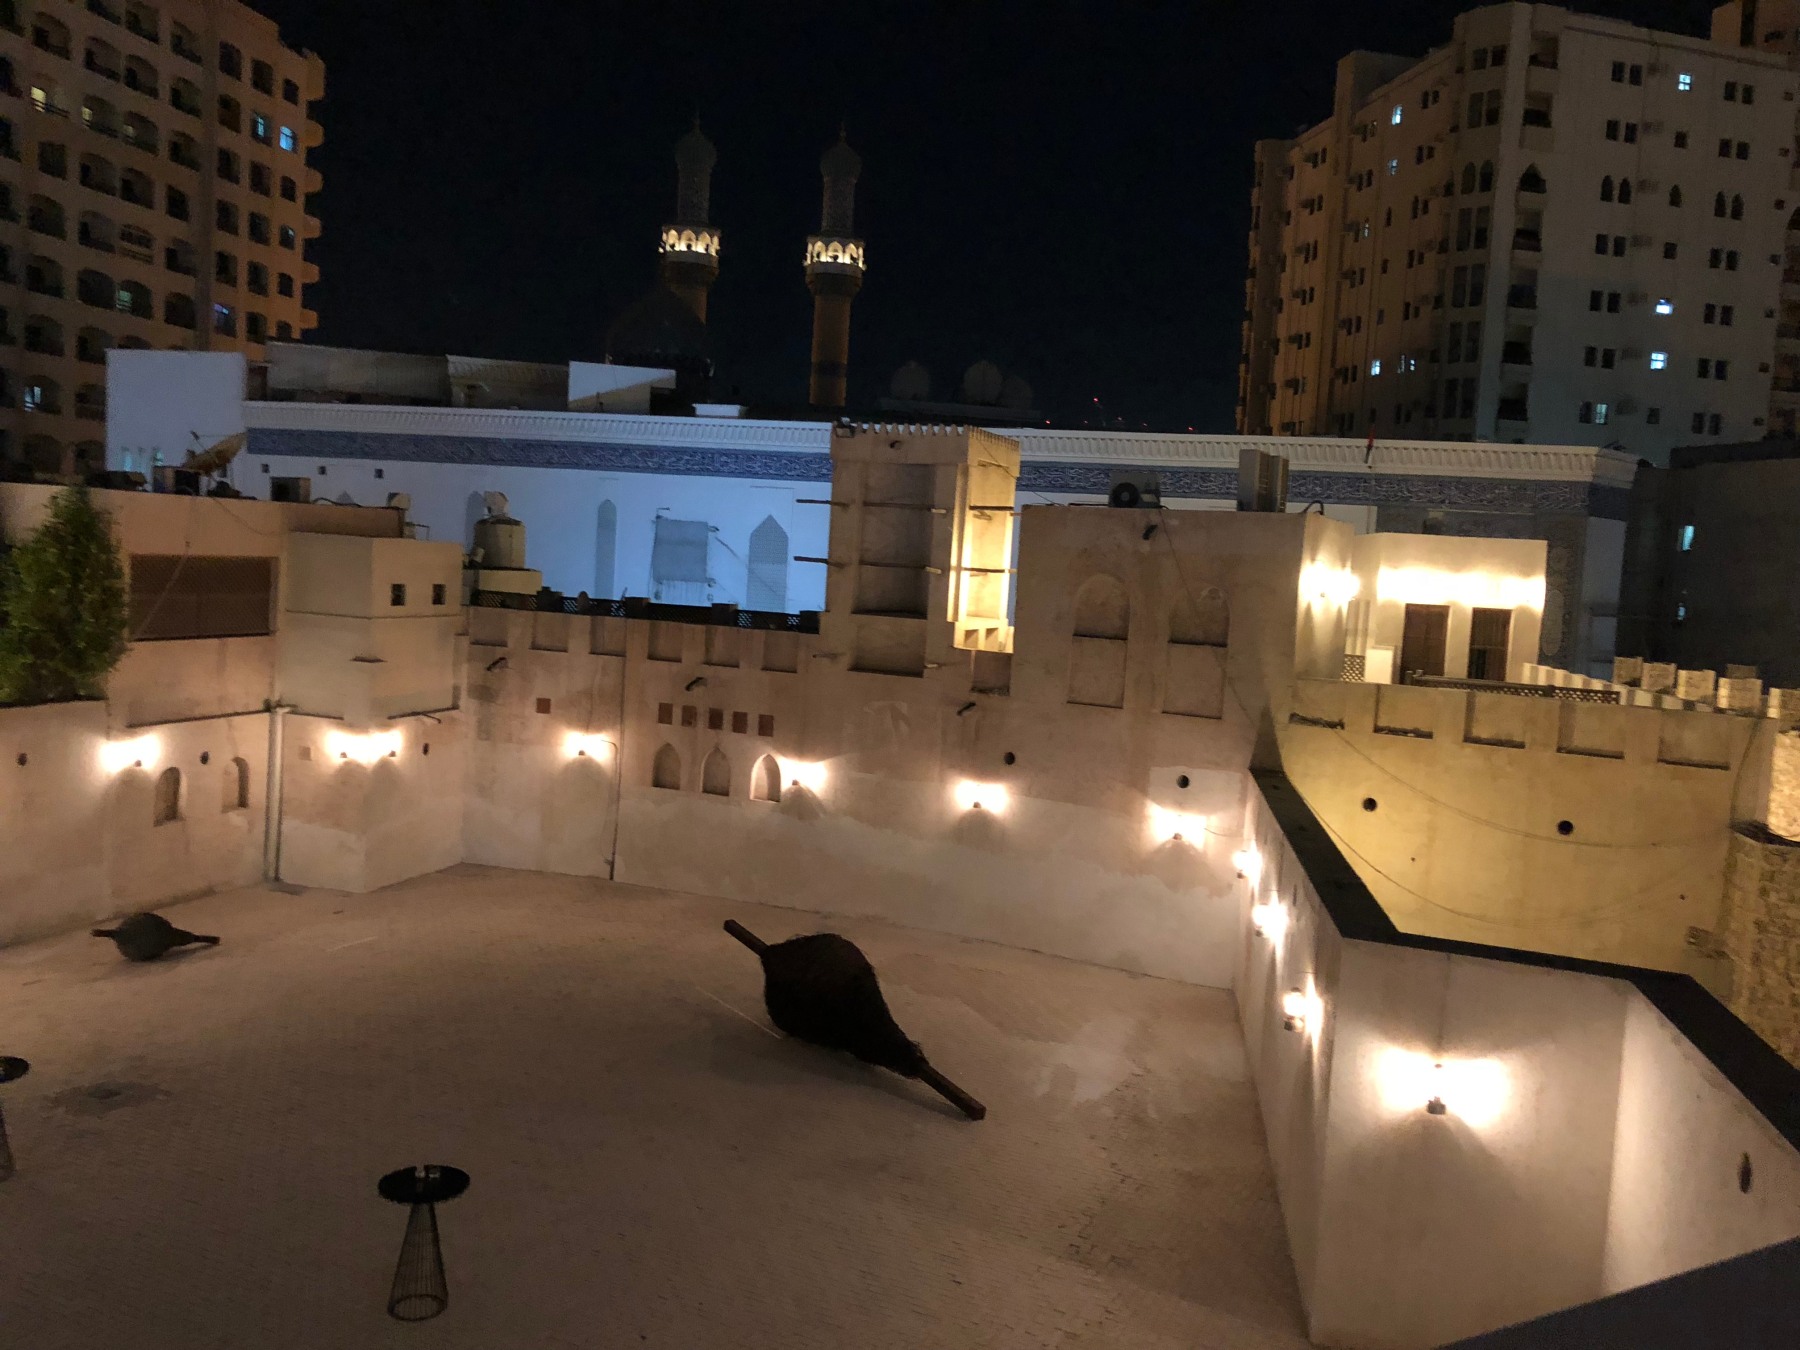 Hassan Sharif: I Am The Single Work Artist, installation view, Sharjah Art Foundation (2017)